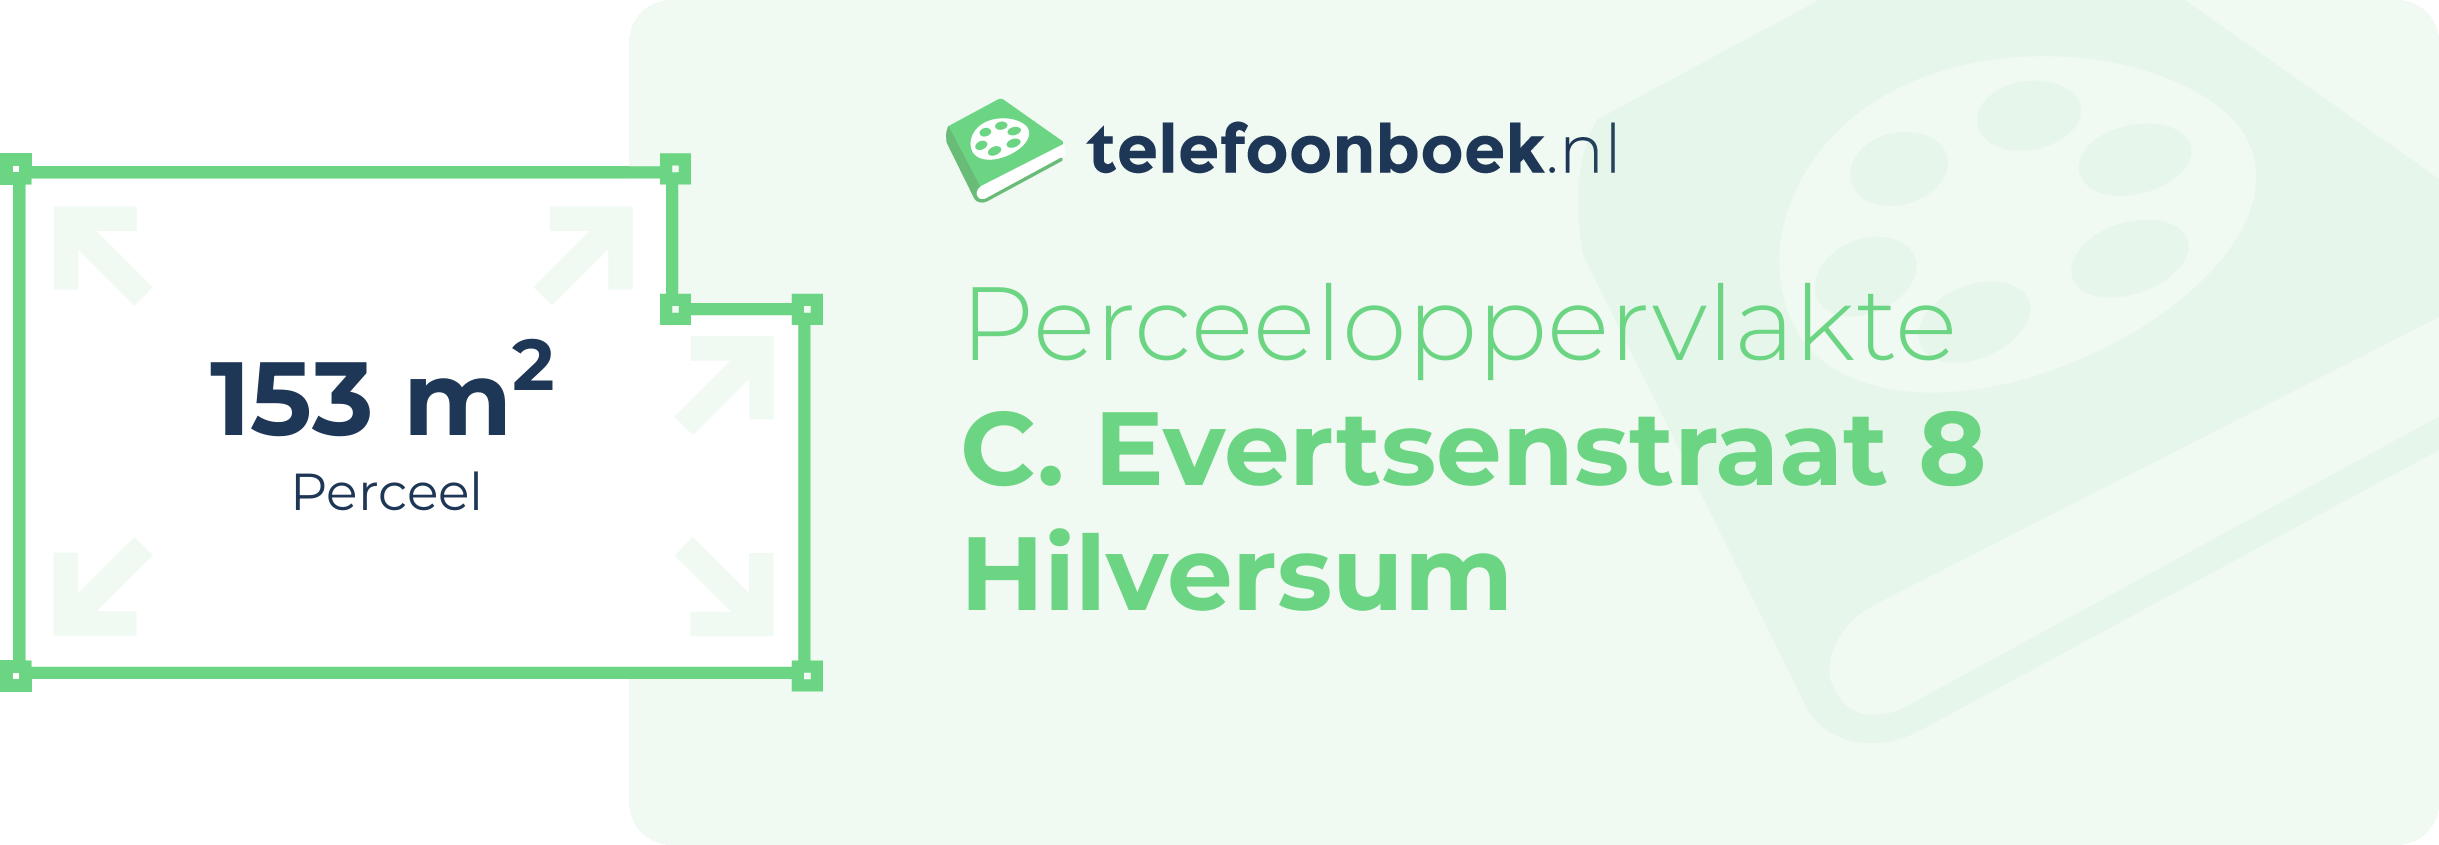 Perceeloppervlakte C. Evertsenstraat 8 Hilversum